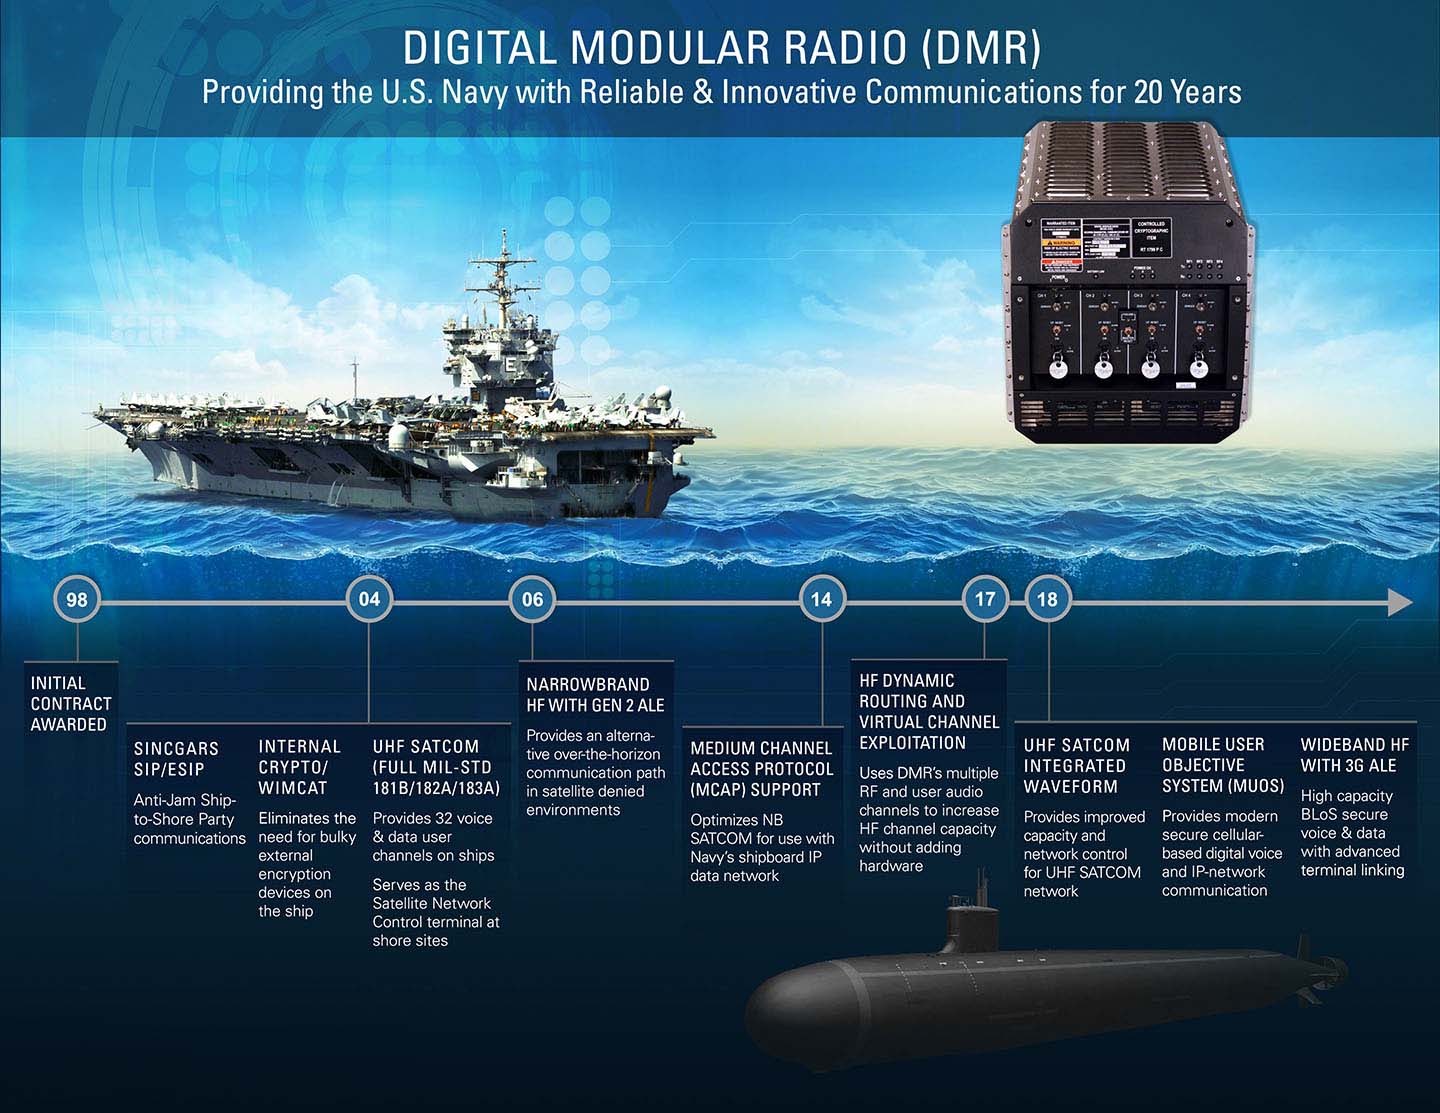 Digital Modular Radio DMR Timeline Graphic